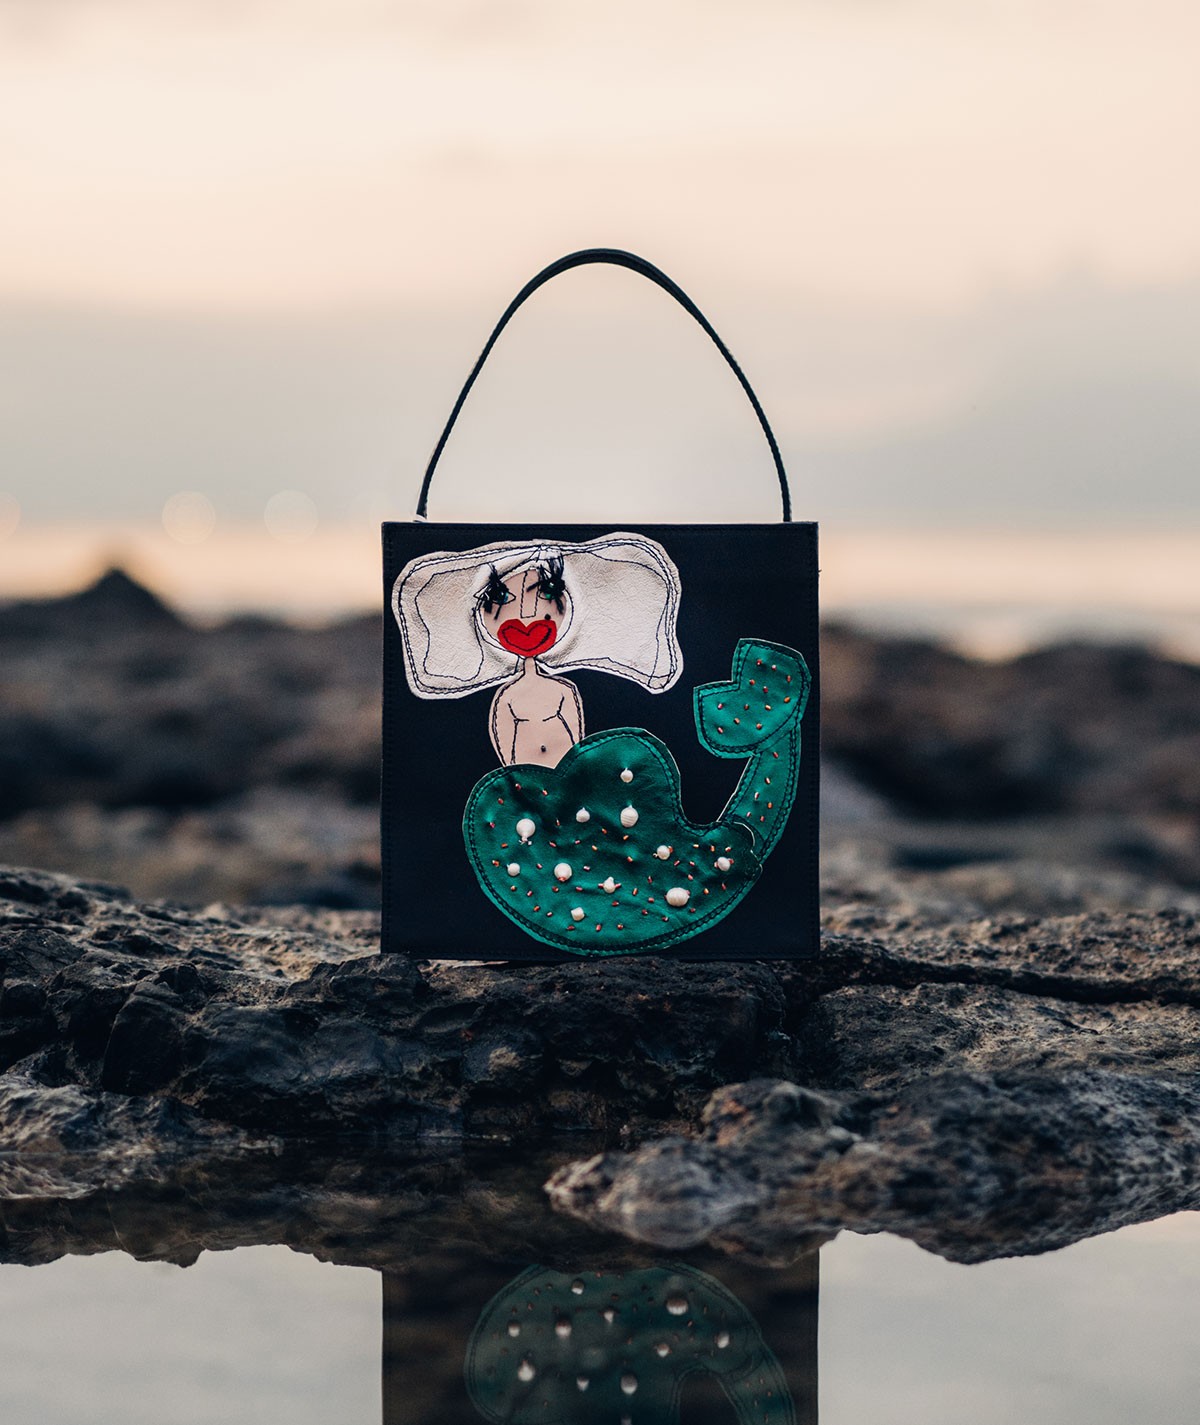 Le borse artigianali di Federica - The Mermaid Fashion